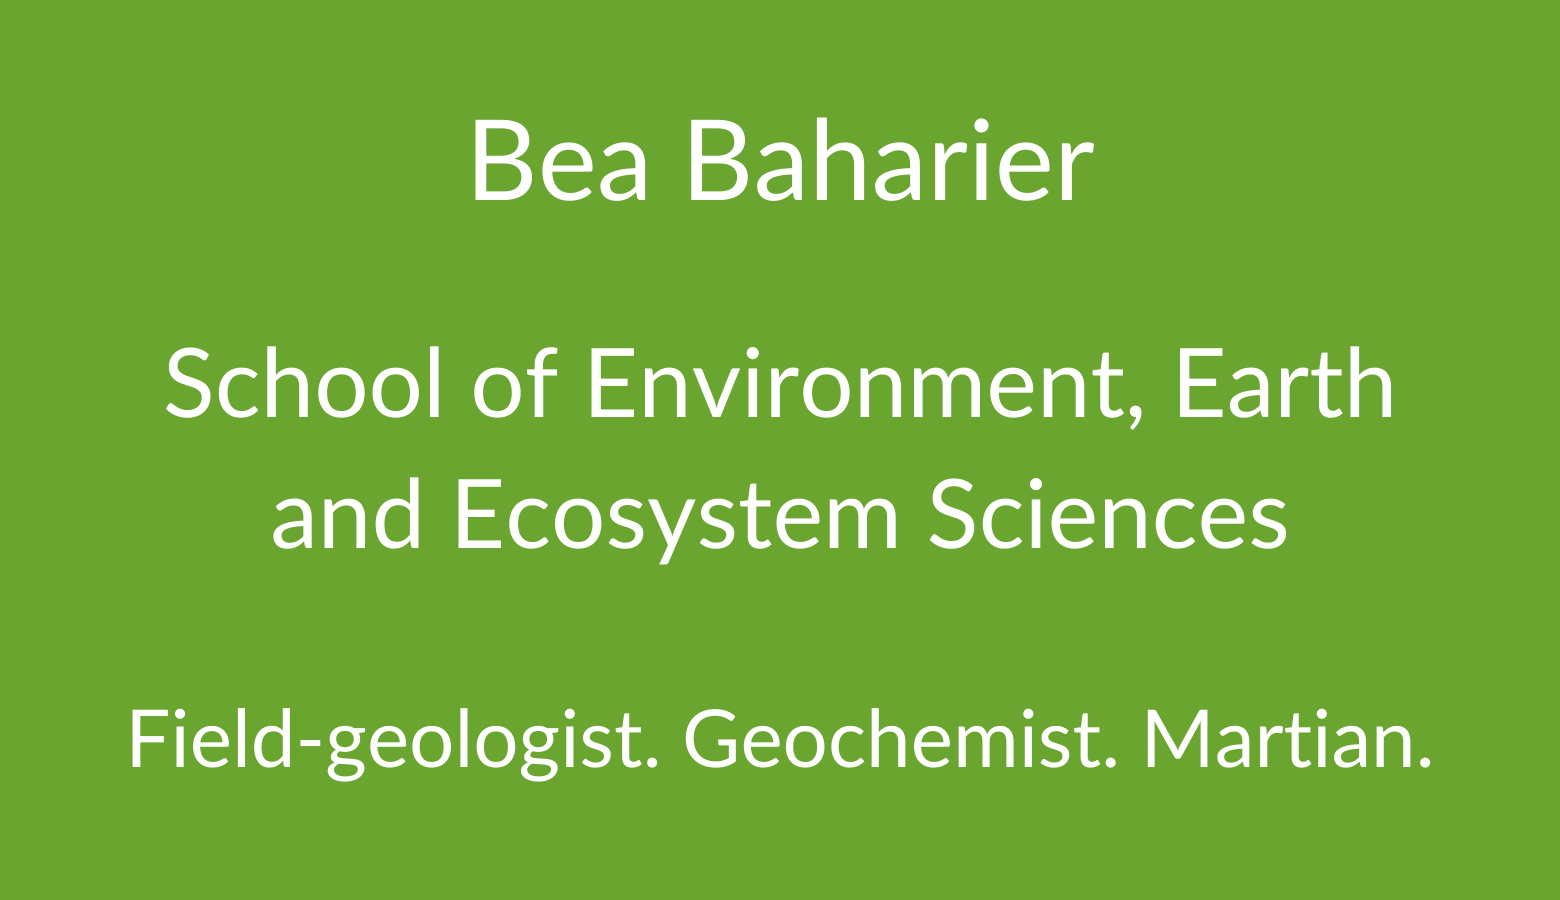 Bea Baharier. School of Environment, Earth and Ecosystem Sciences. Field-geologist. Geochemist. Martian